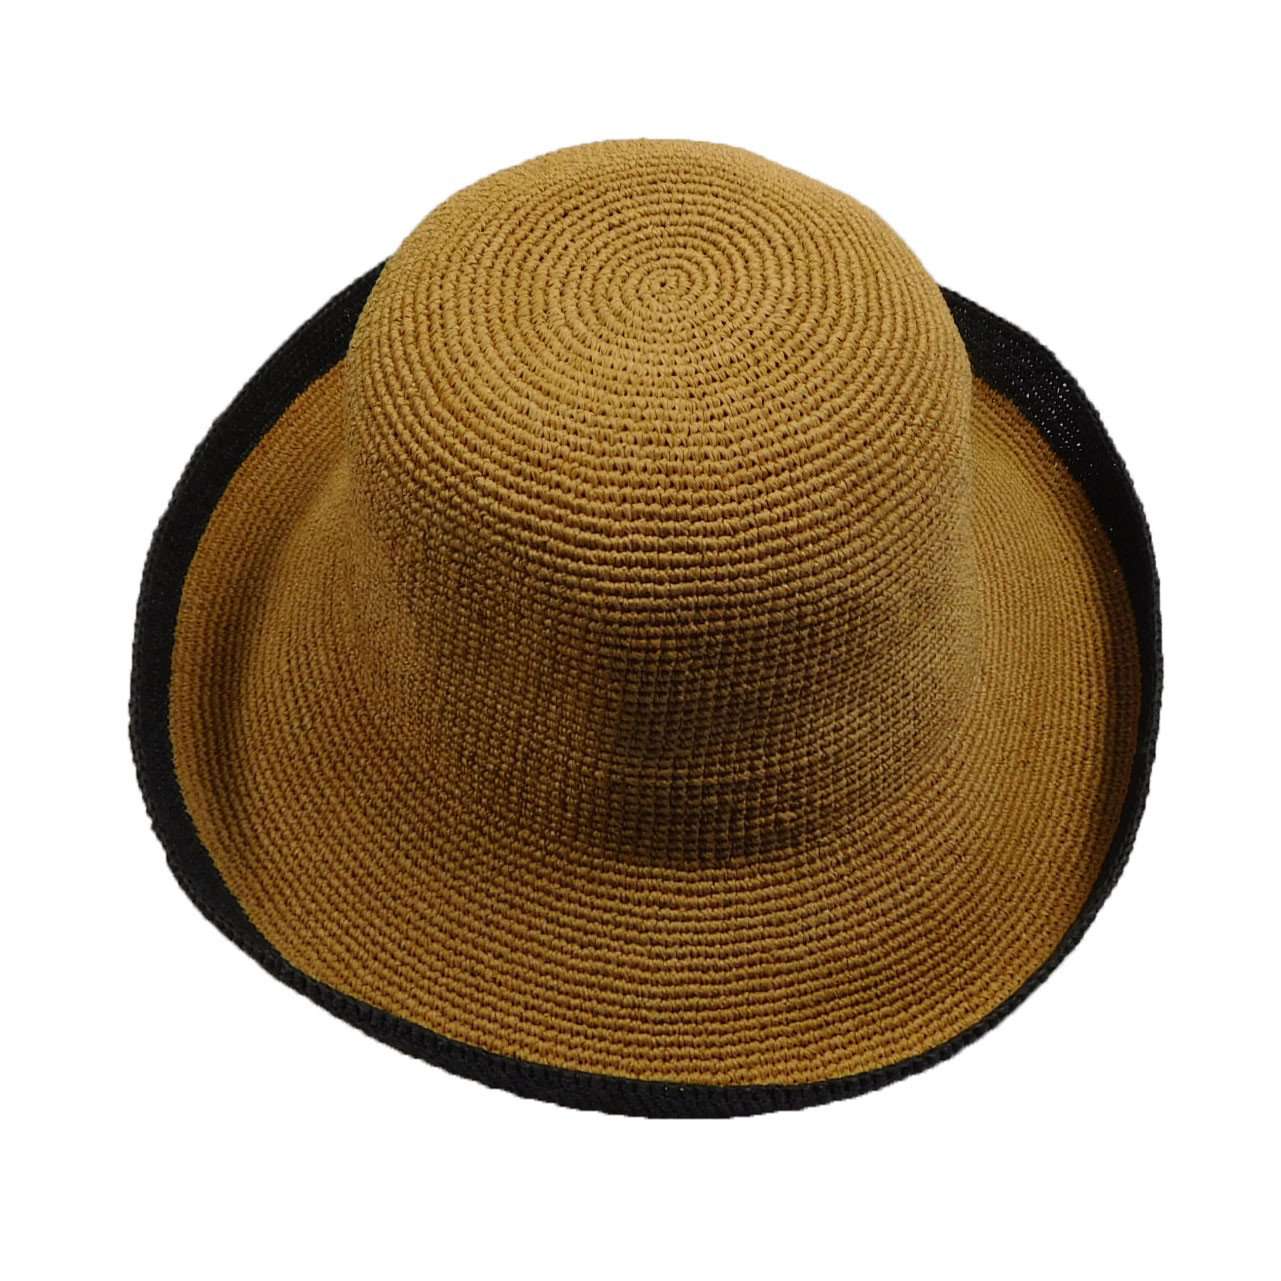 Hand Crocheted Turned Up Brim Hat - Rust Kettle Brim Hat Boardwalk Style Hats    